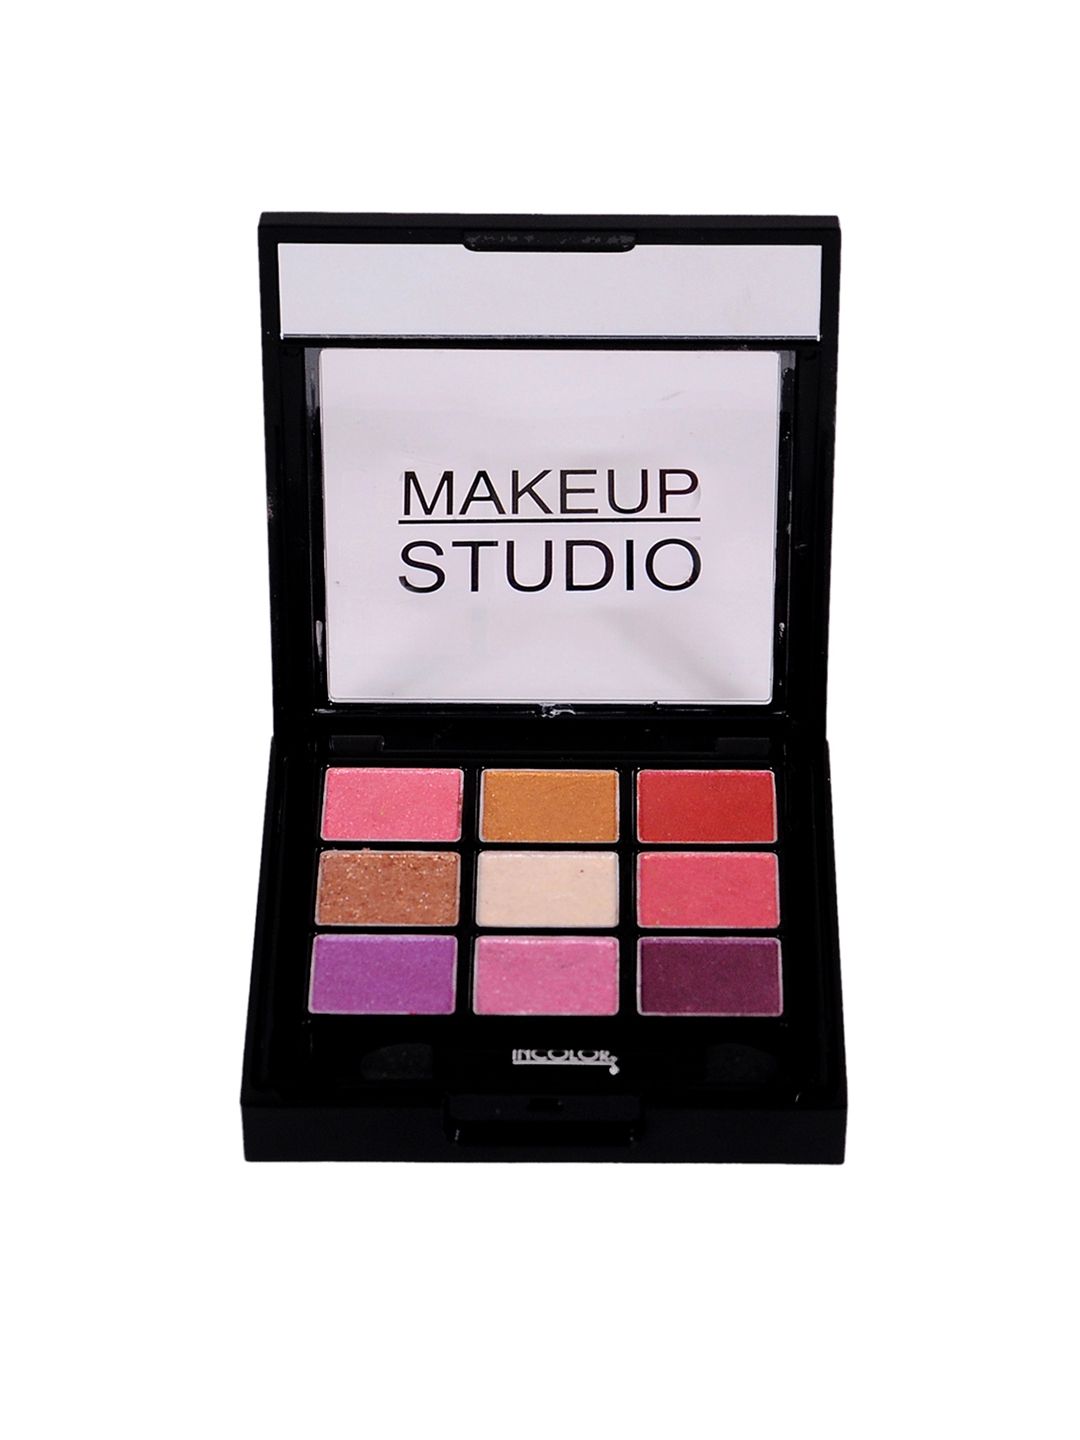 INCOLOR 9 IN 1 Eyeshadow Makeup Studio Kit 18 g 3 Price in India